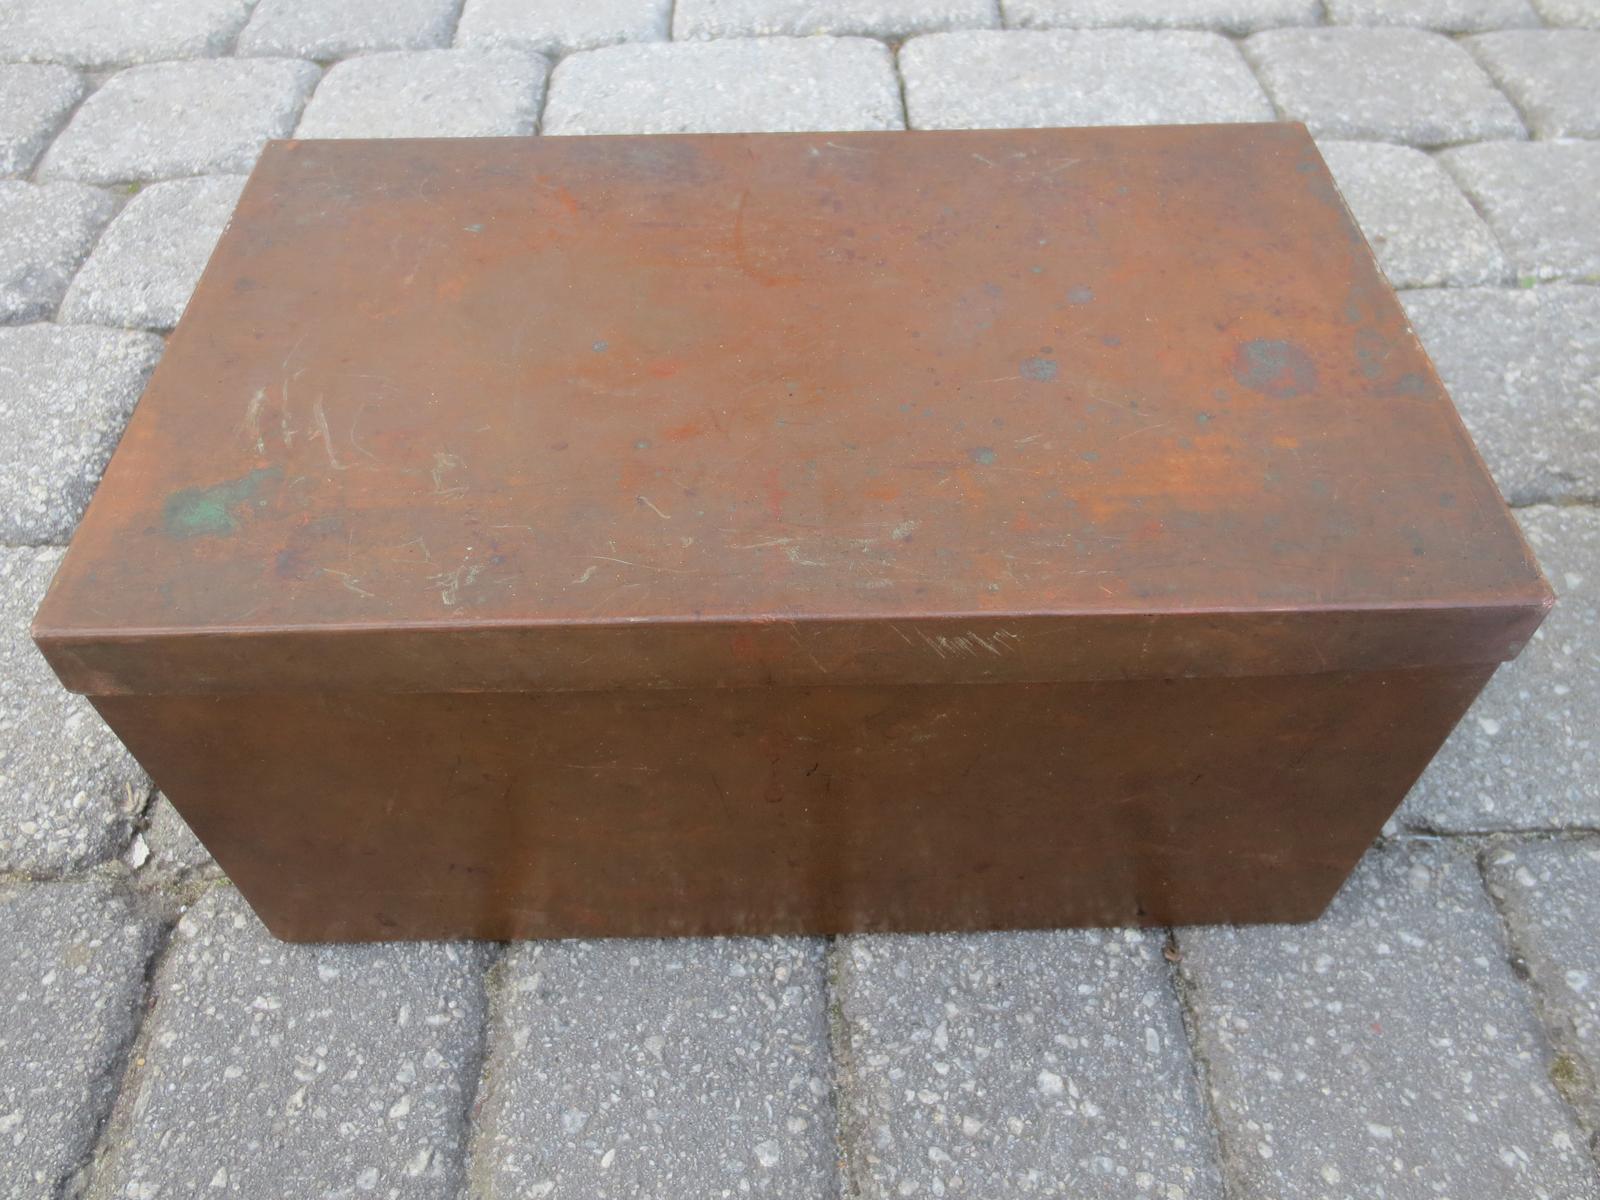 Early 20th century copper box.